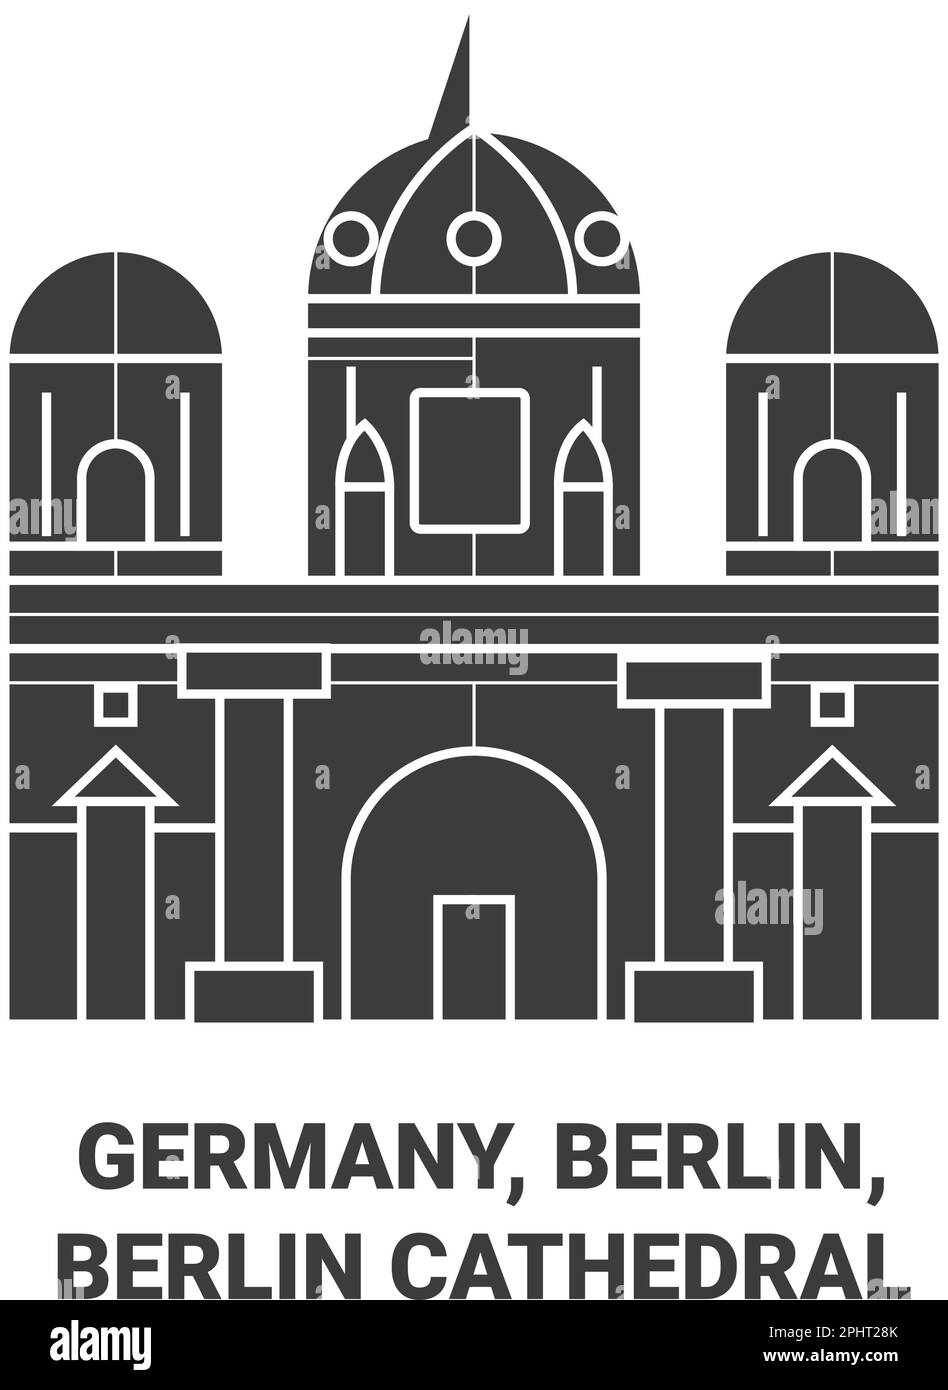 Allemagne, Berlin, Berlin Cathedral voyage illustration vectorielle Illustration de Vecteur